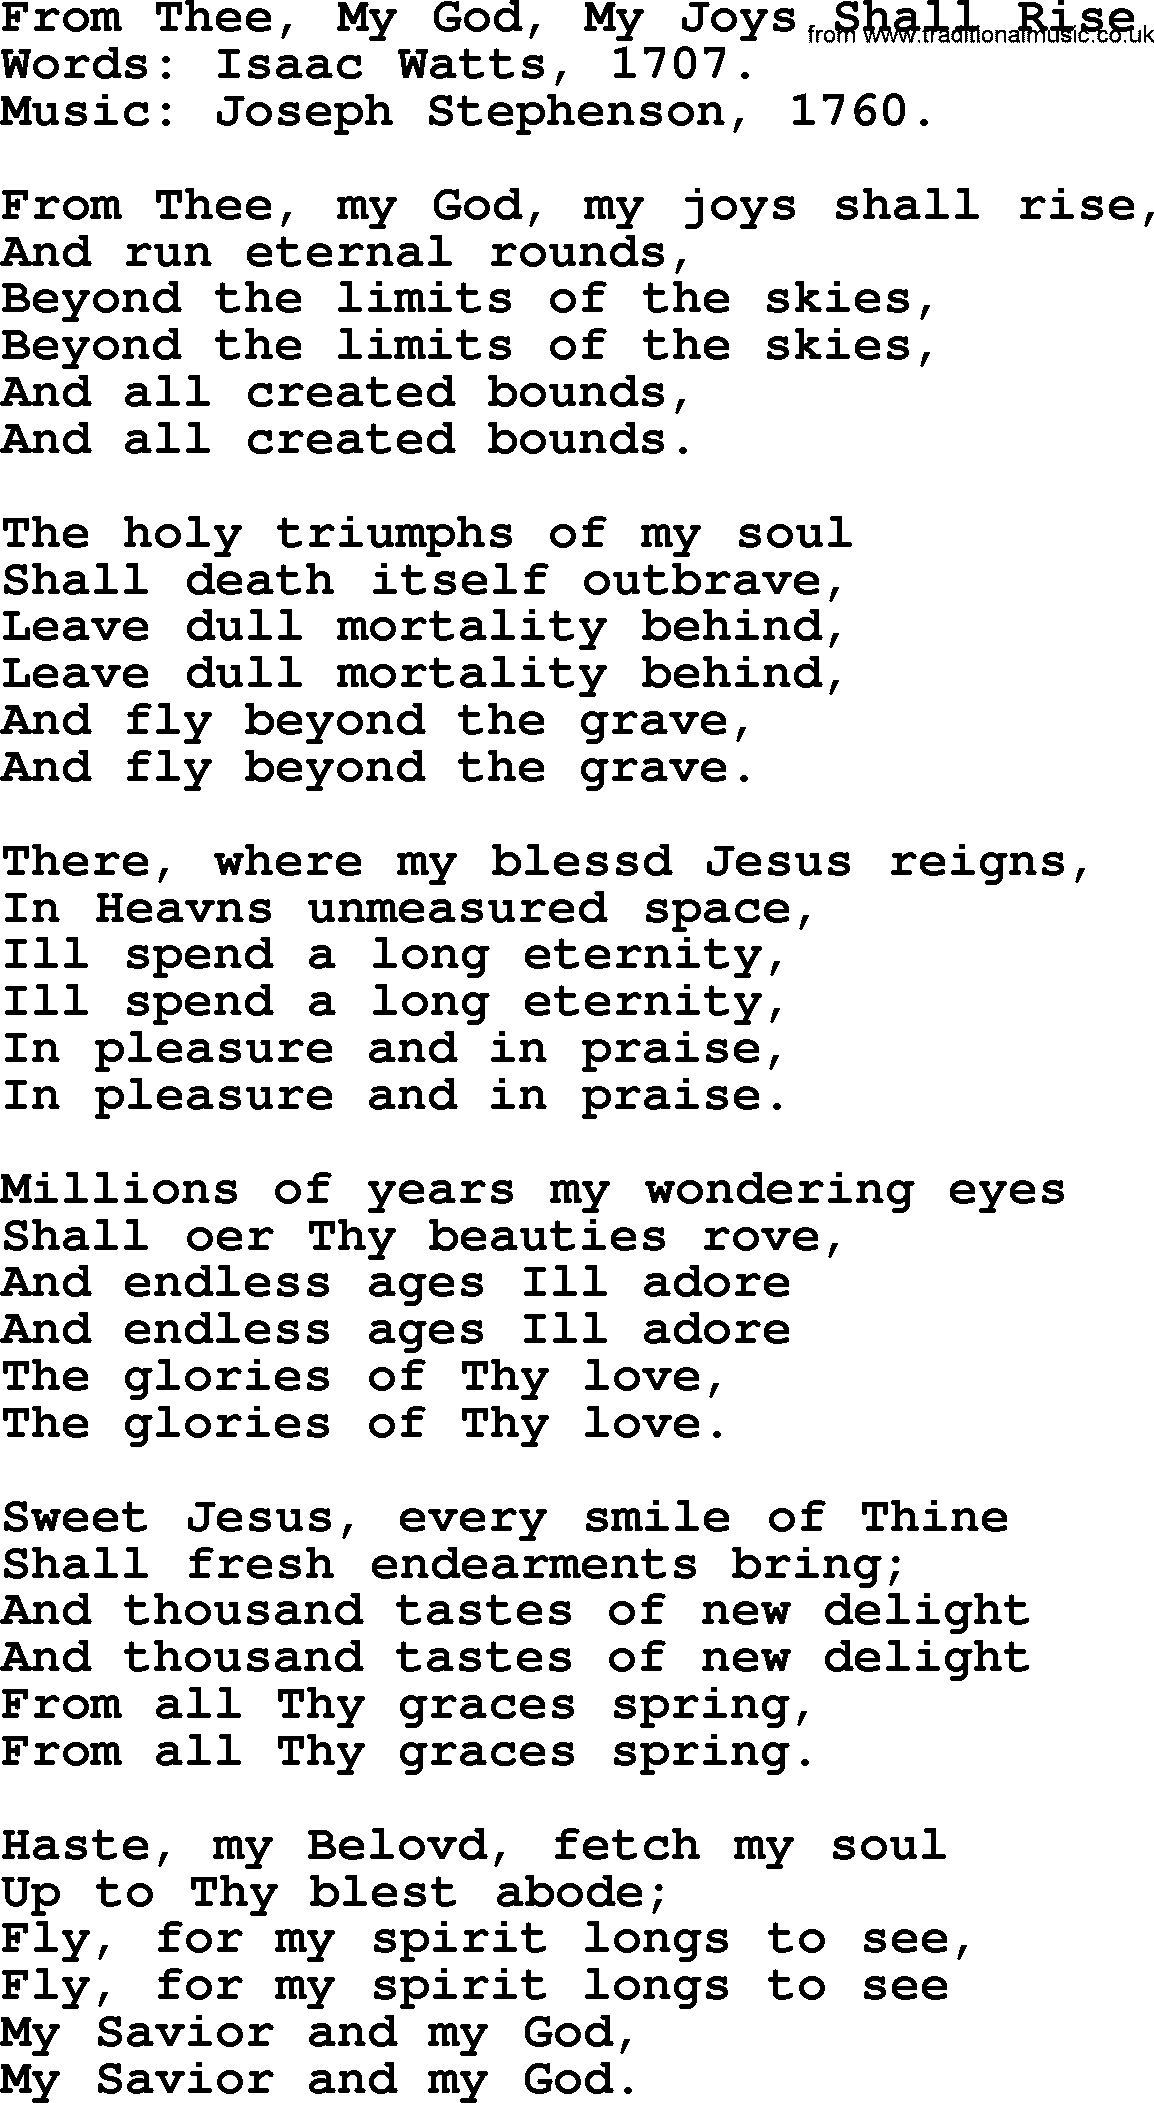 Isaac Watts Christian hymn: From Thee, My God, My Joys Shall Rise- lyricss